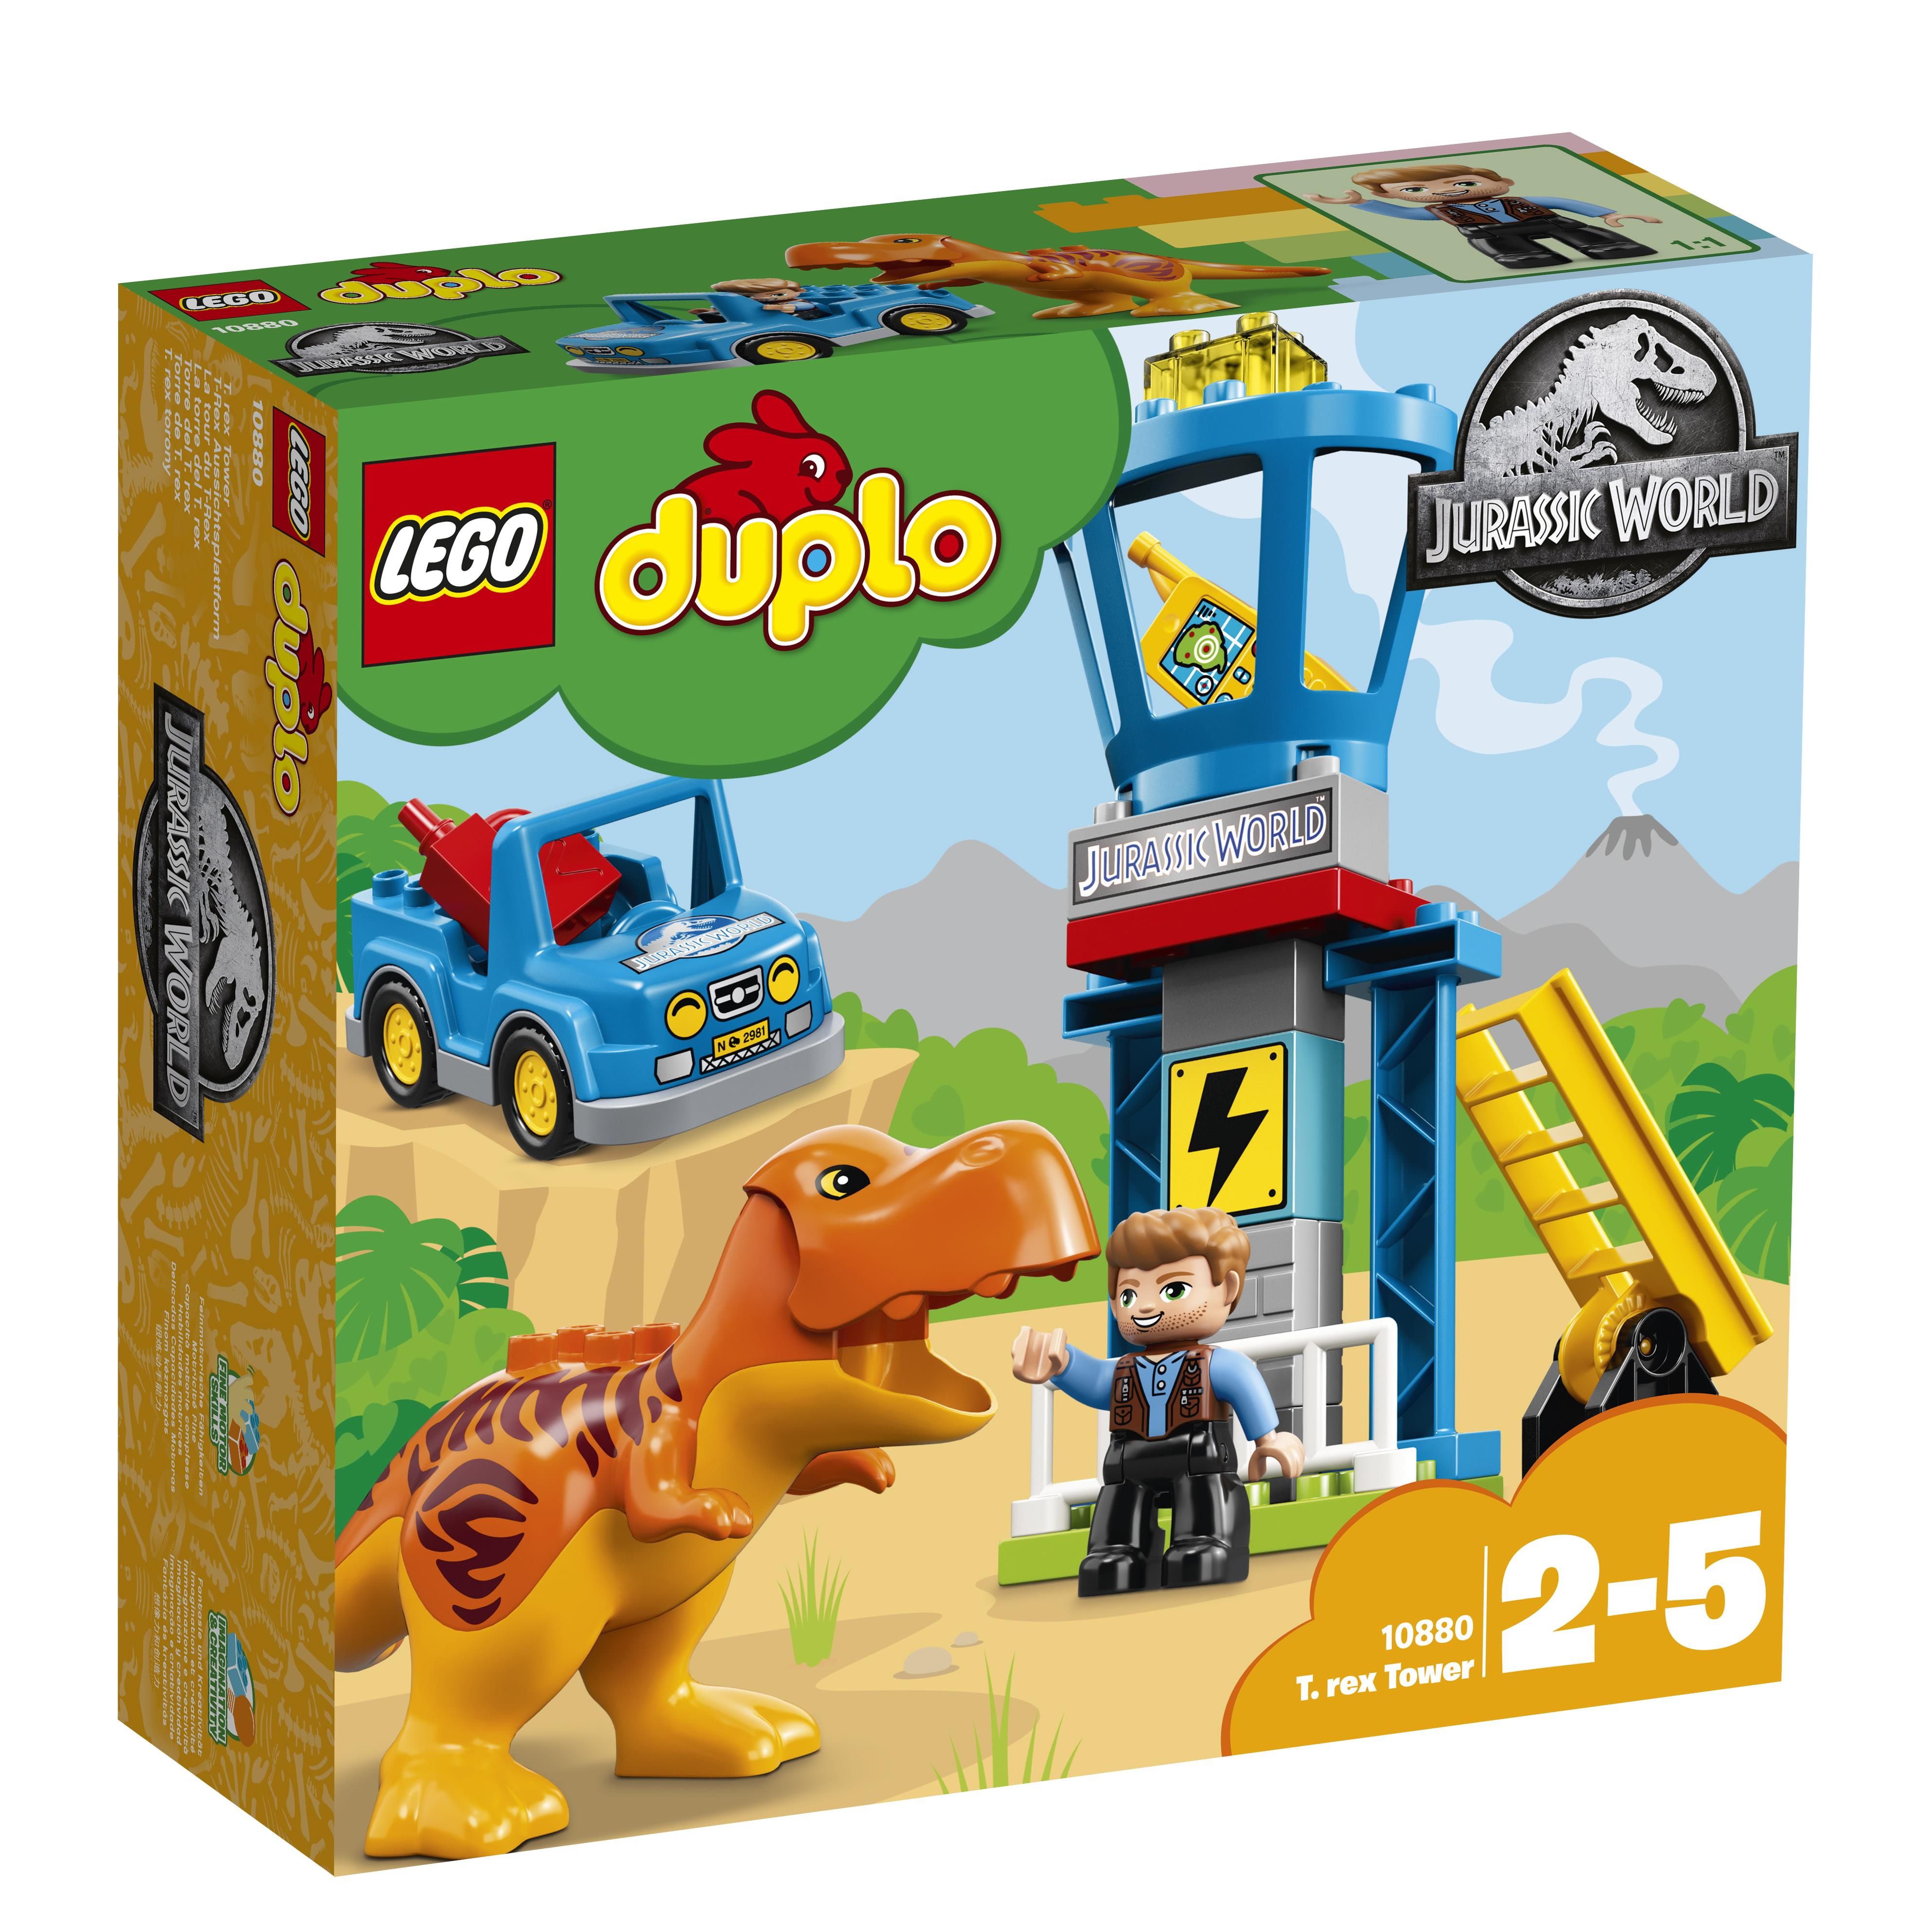 LEGO DUPLO Jurassic World